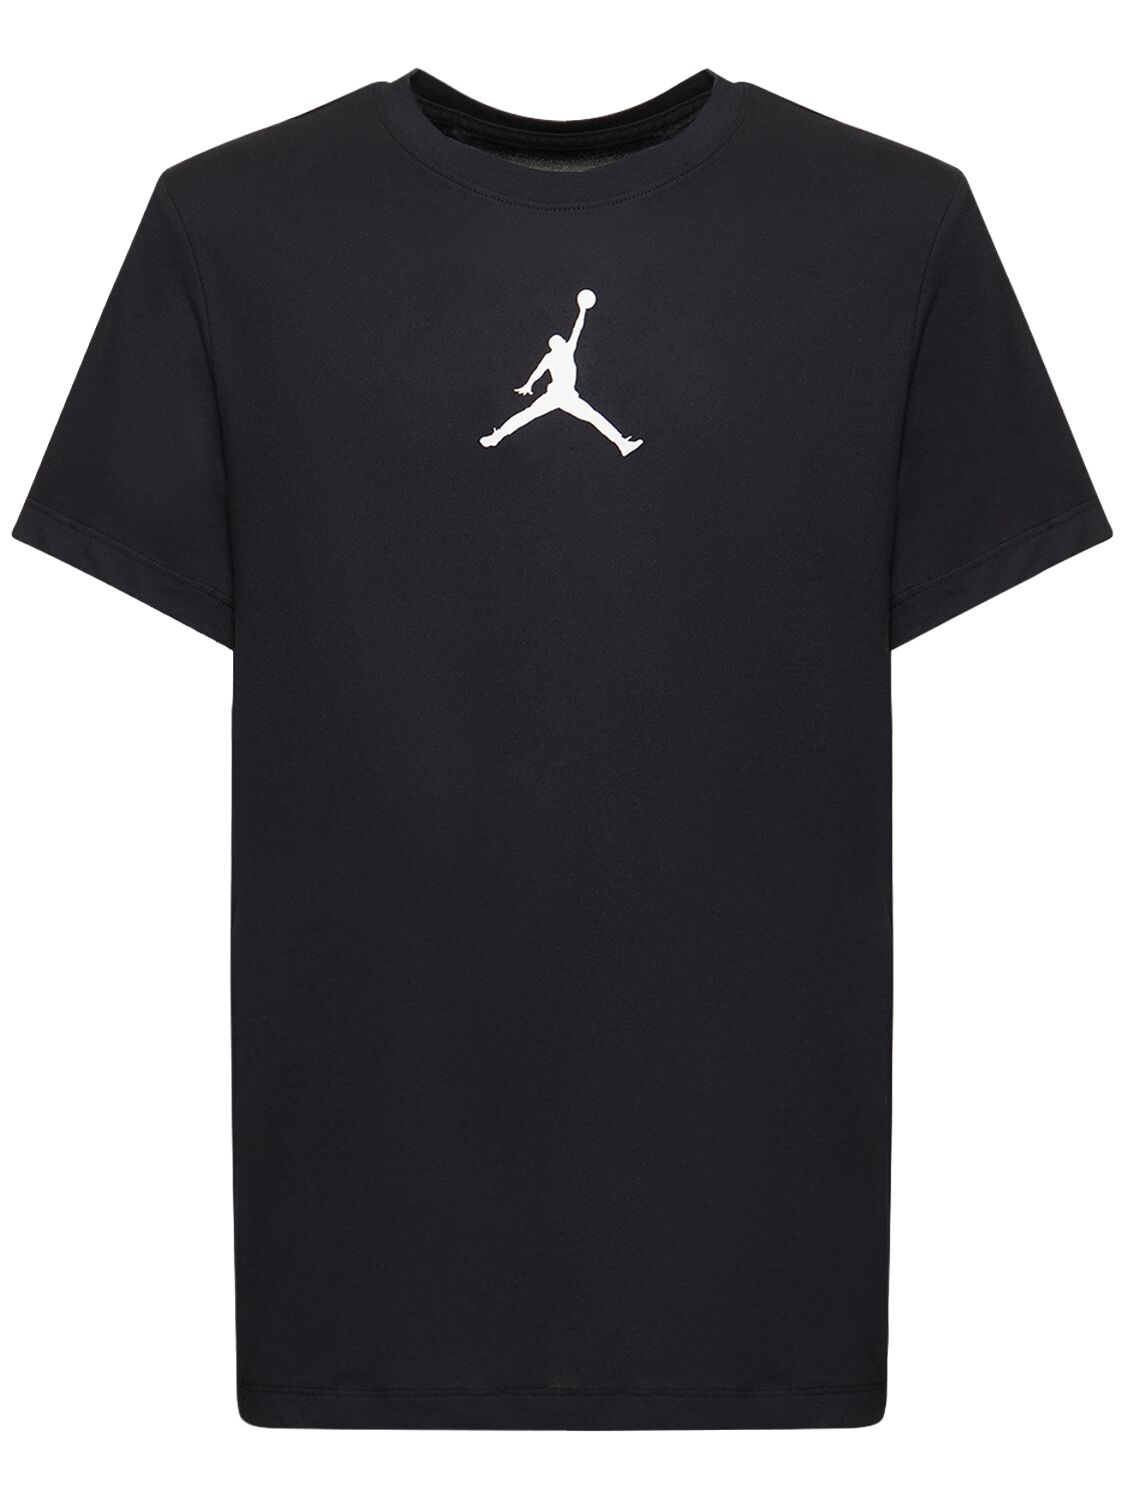 Image of Jordan Jumpman T-shirt